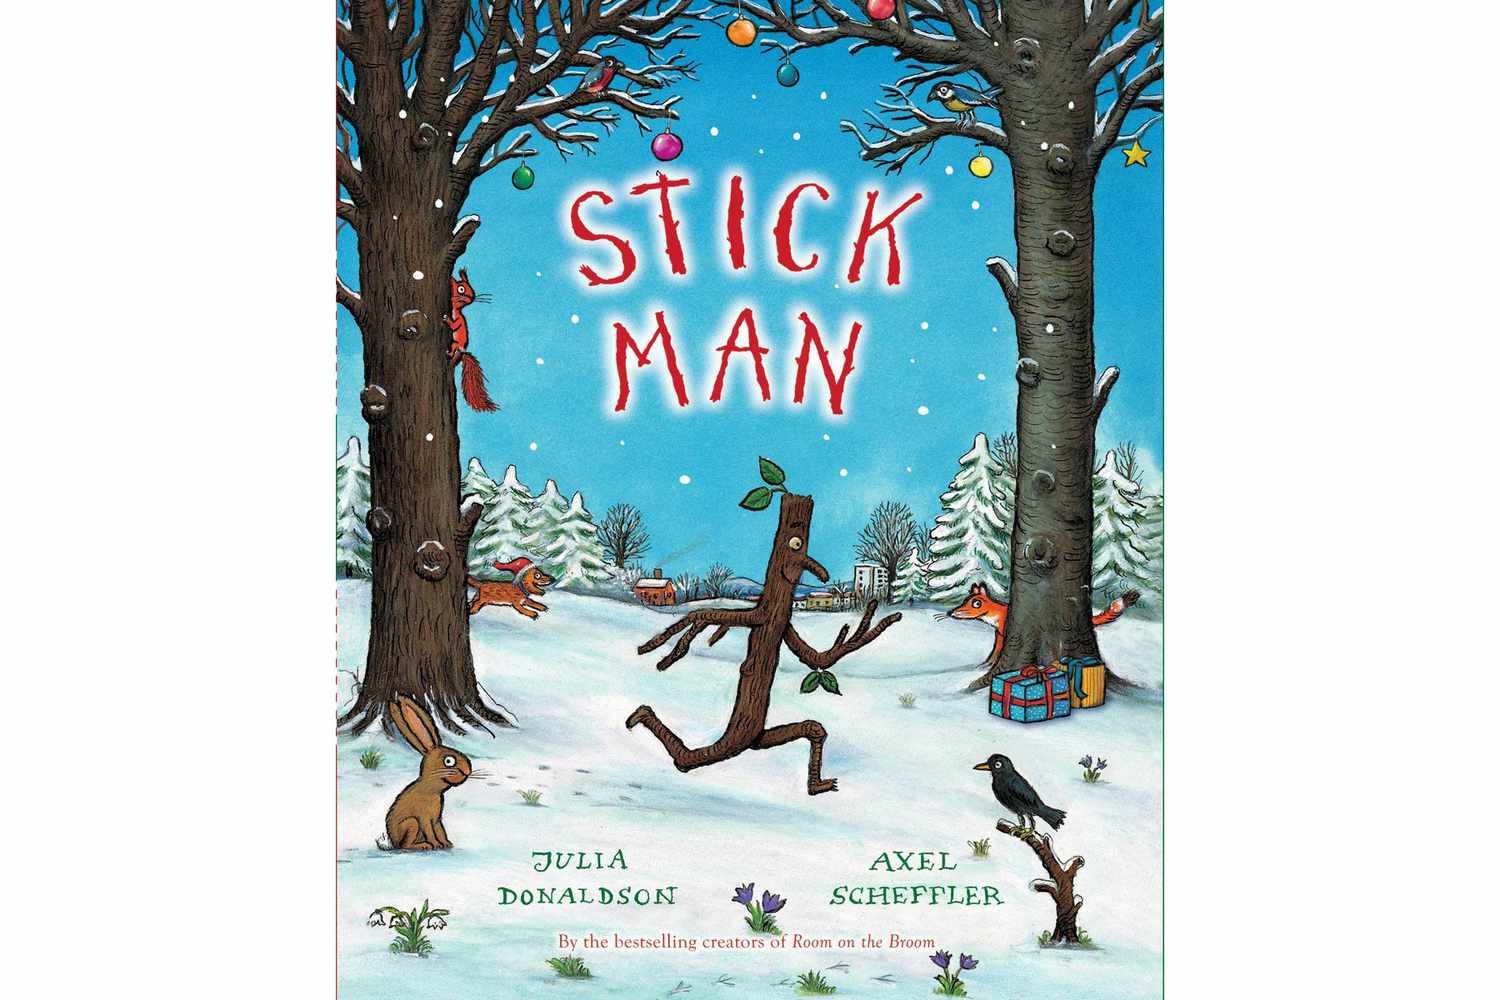 Stick Man, by Julia Donaldson and Axel Scheffler